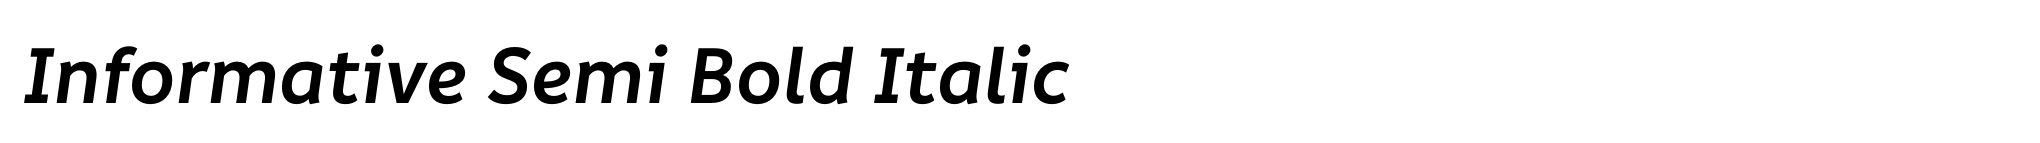 Informative Semi Bold Italic image